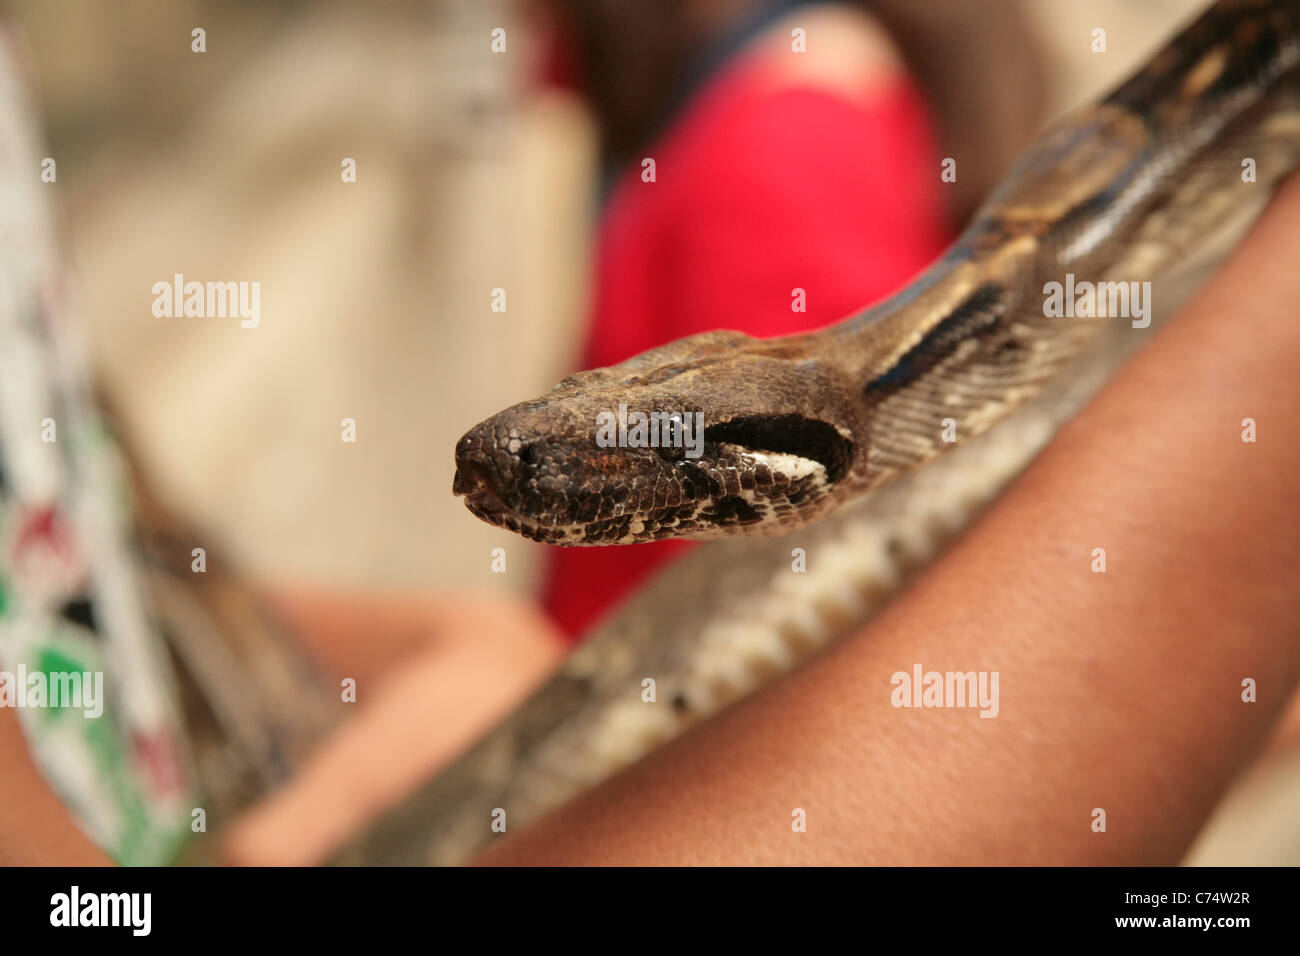 Non poisonous snake at an exhibition. Stock Photo